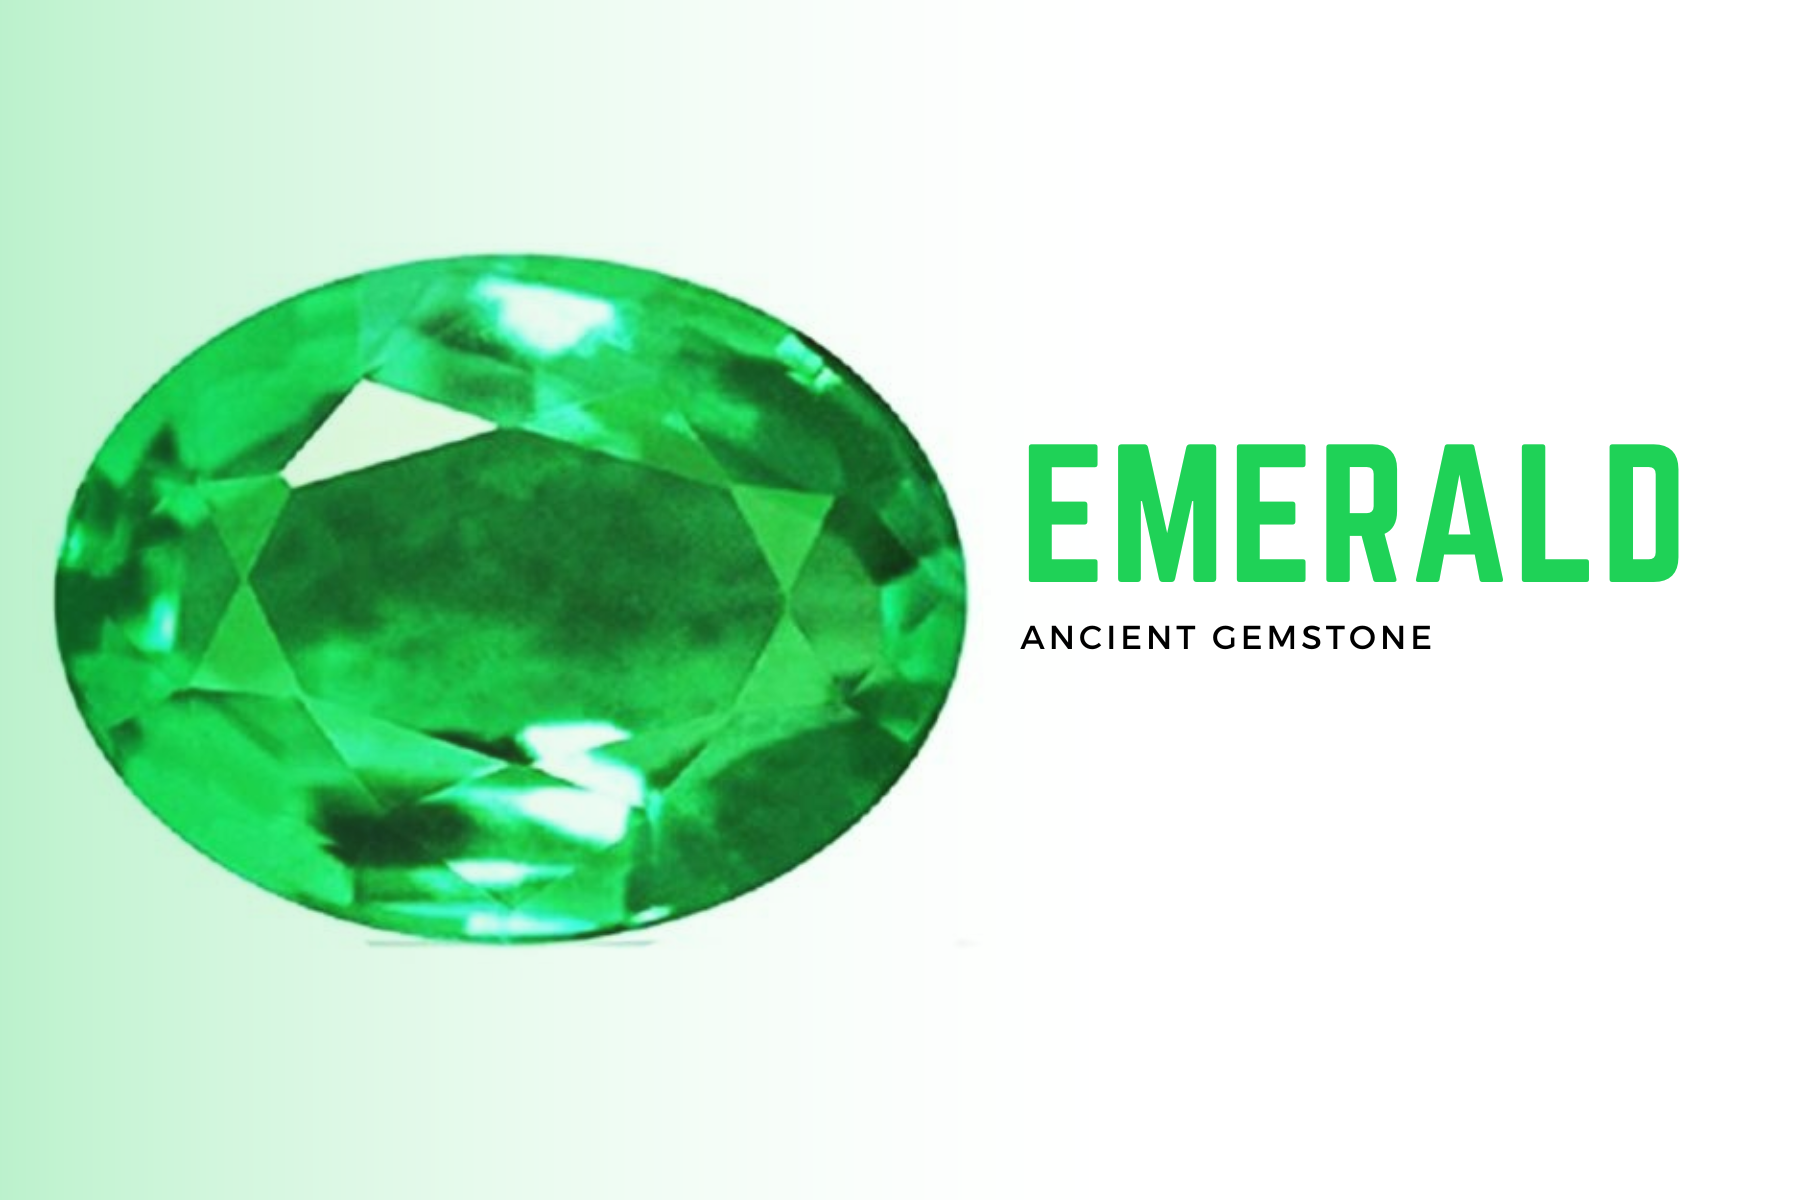 Oblong green emerald stone